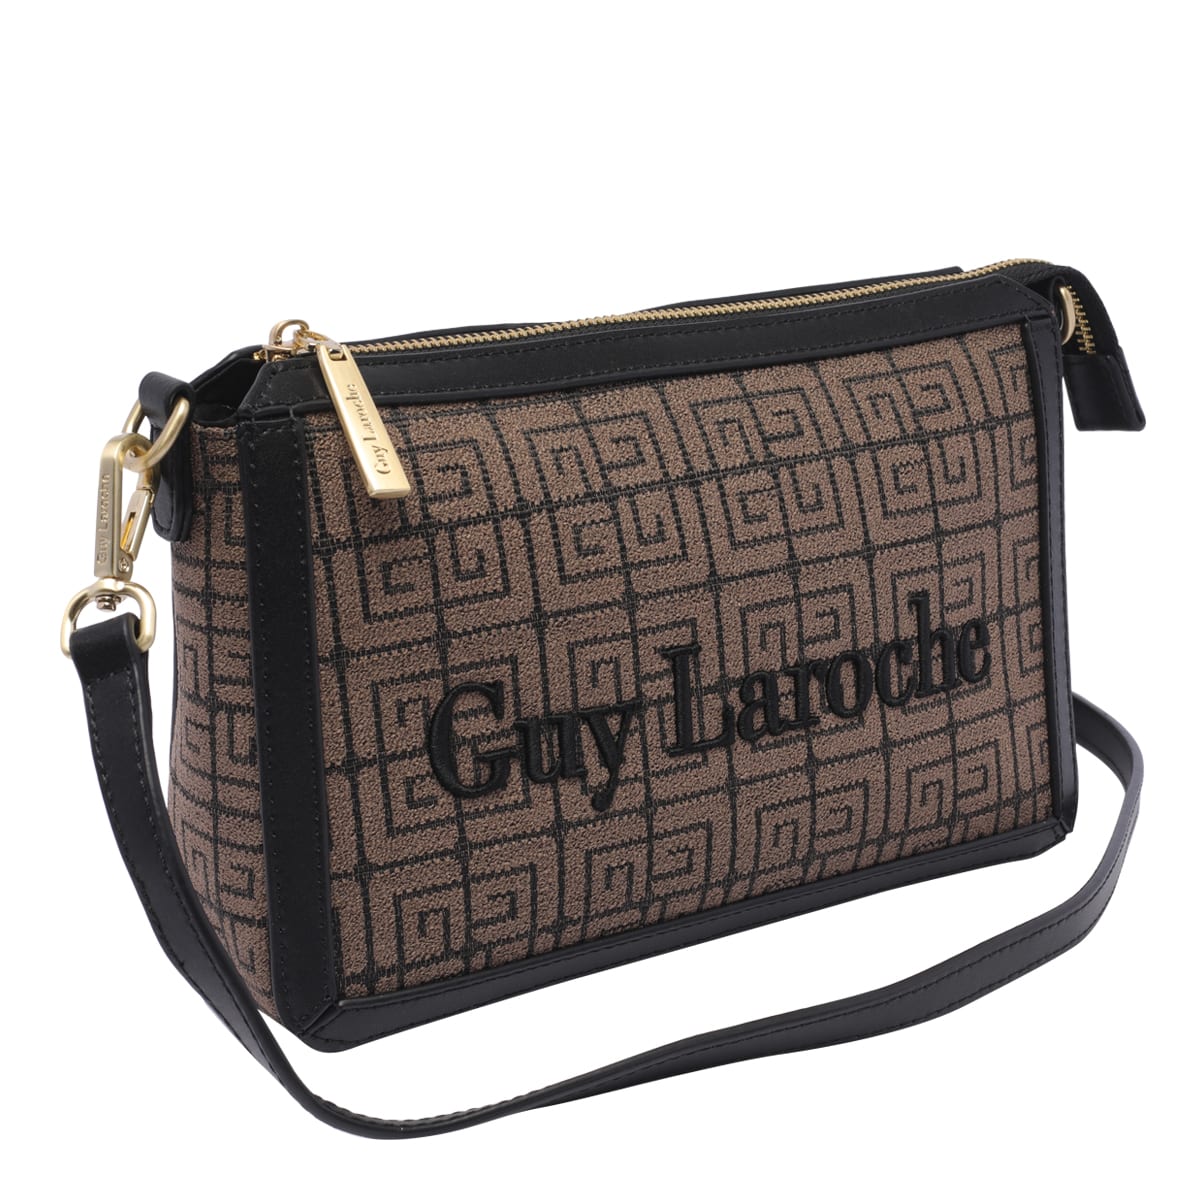 Guy Laroche bag brown H 28 B 41-44 T 17 leather good condition designer bag